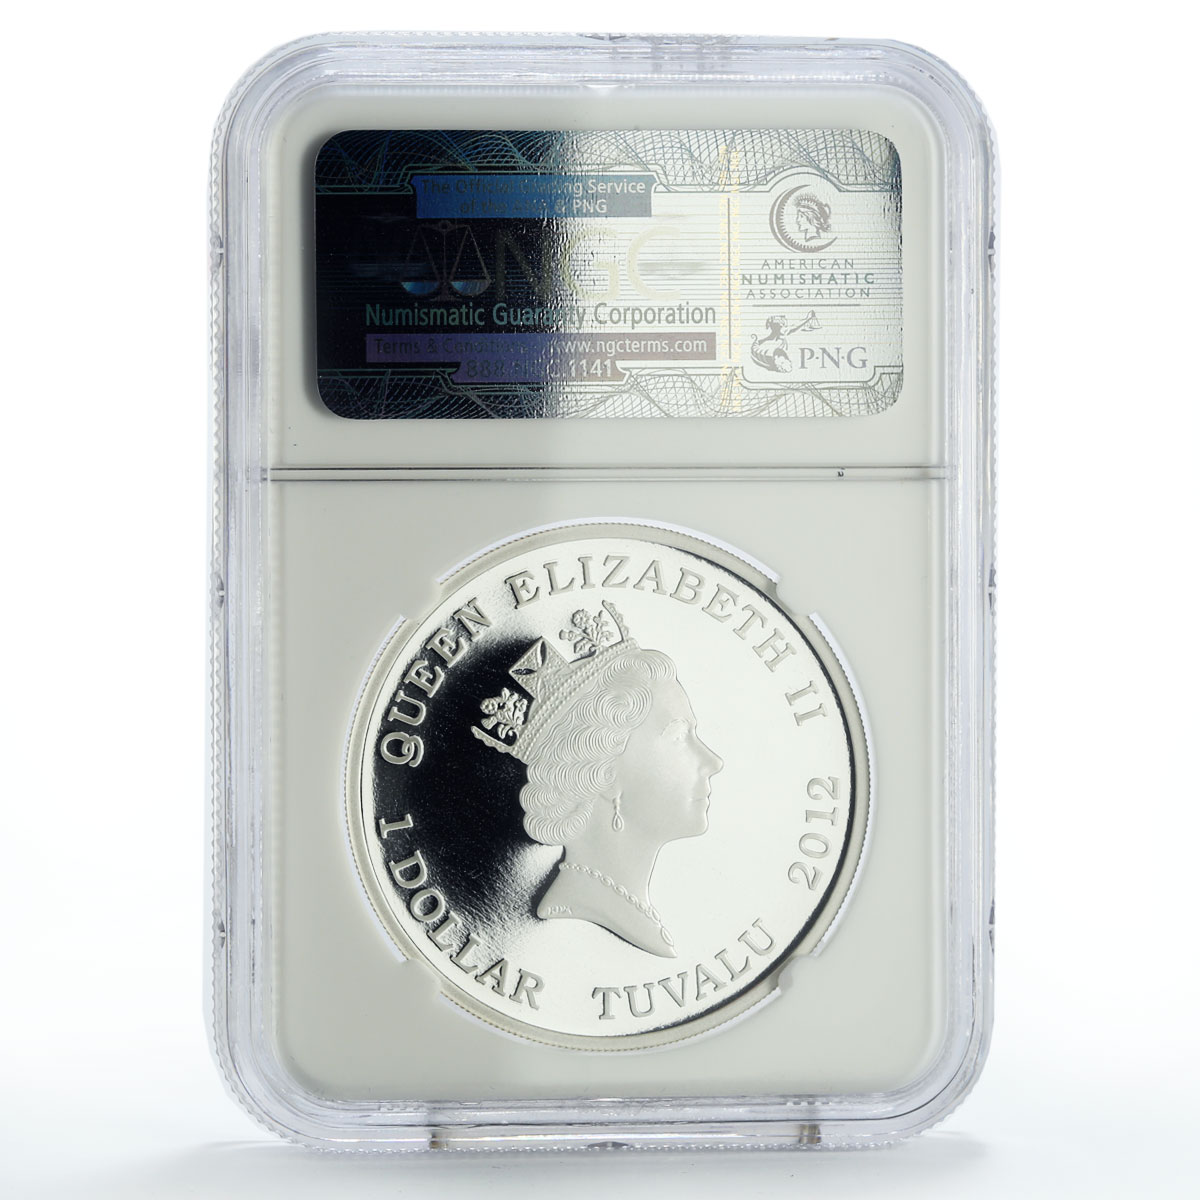 Tuvalu 1 dollar Seafaring Cutty Sark Ship Clipper PF70 NGC silver coin 2012